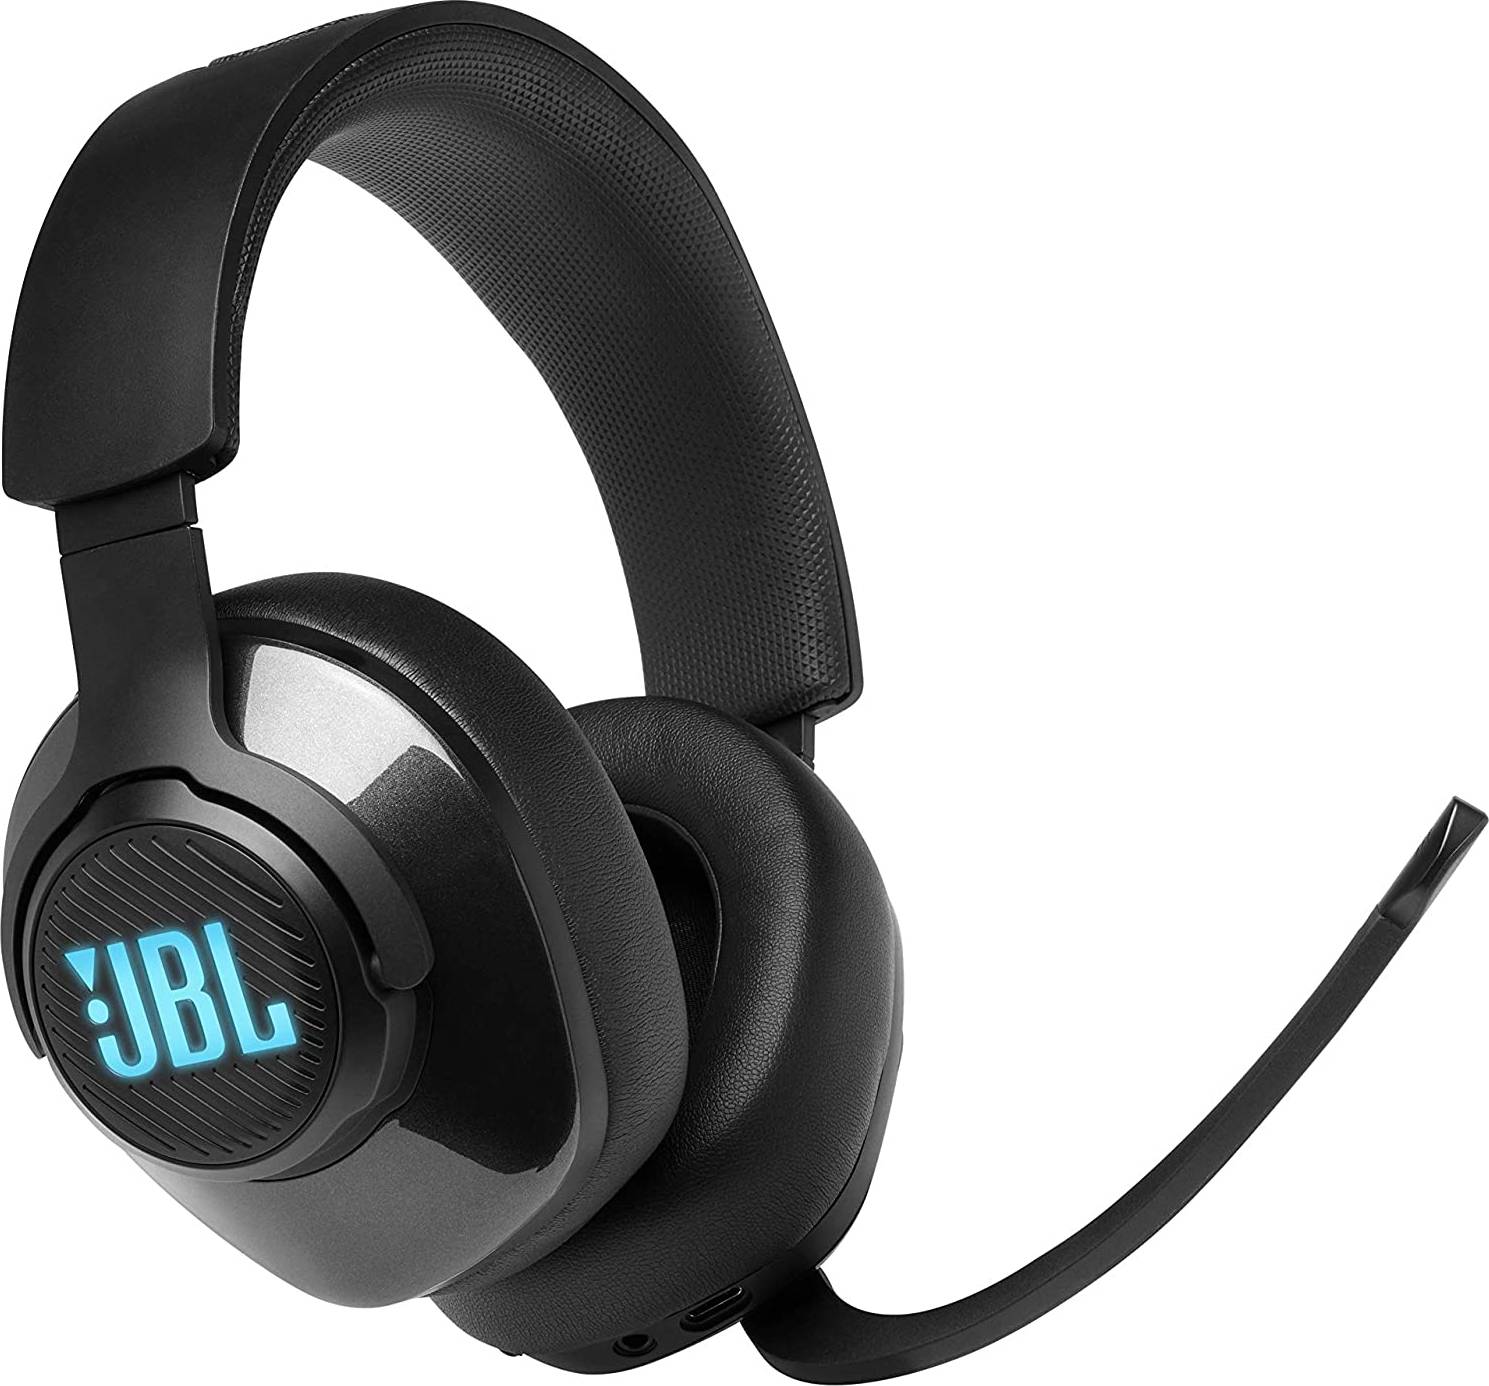  Bild på JBL Quantum 400 gaming headset